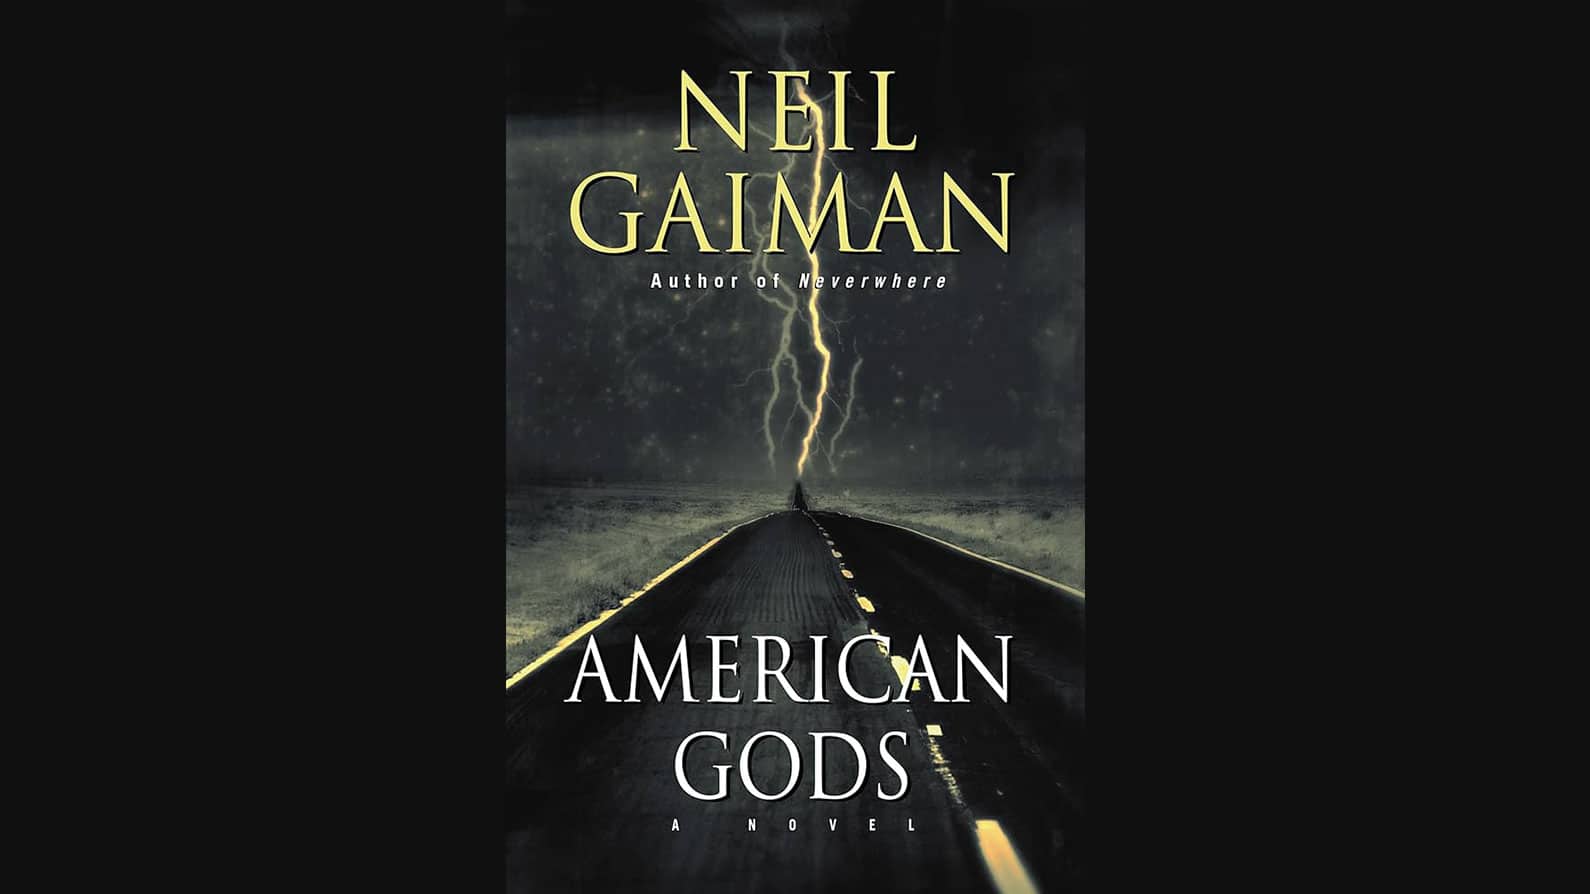 American Gods van Neil Gaiman kaft boek weg bliksem